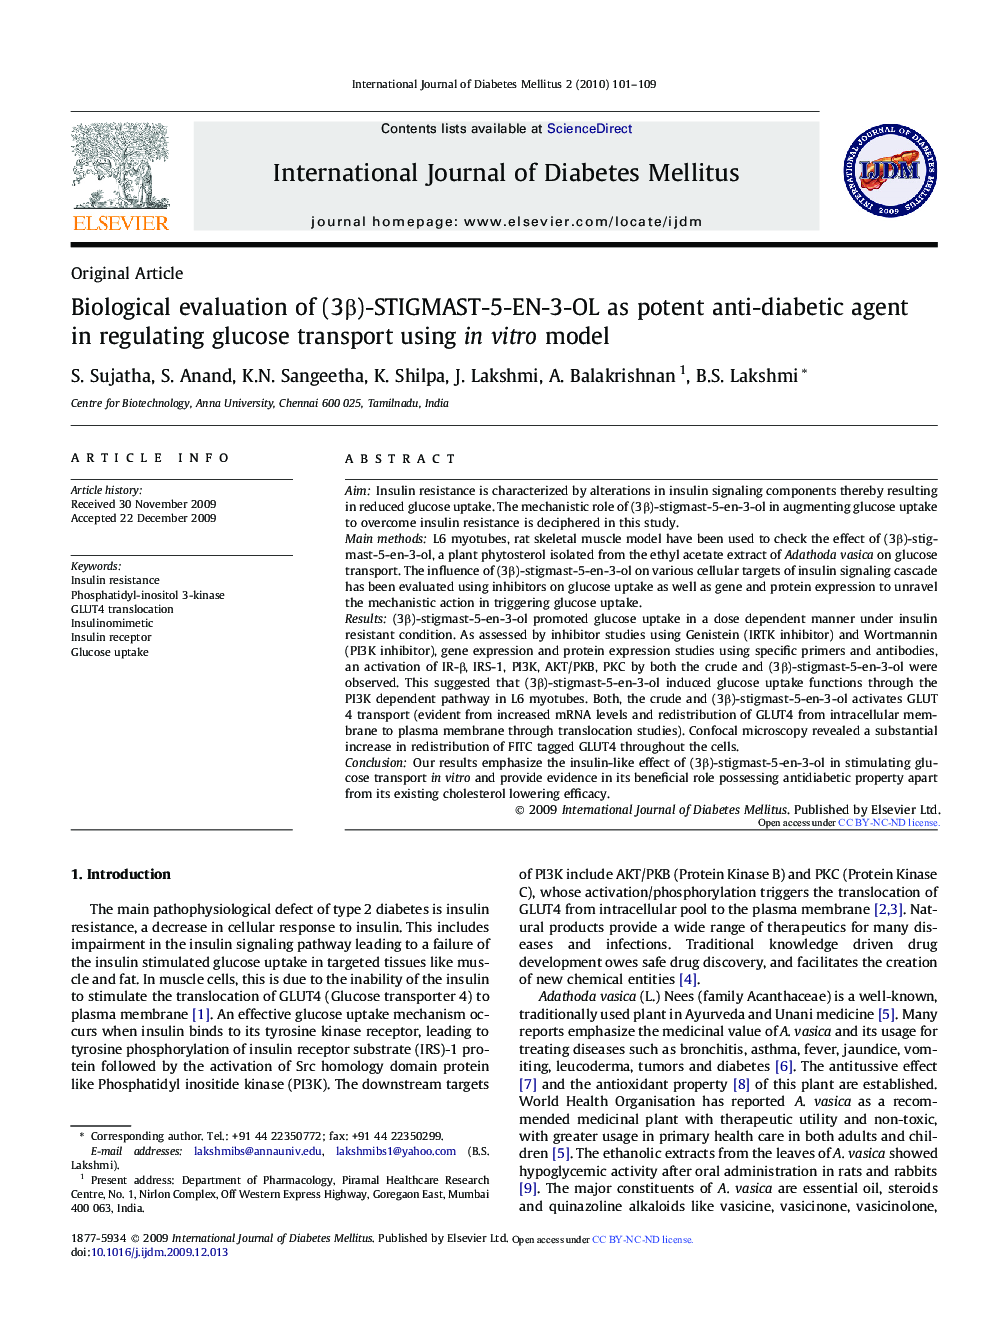 Biological evaluation of (3β)-STIGMAST-5-EN-3-OL as potent anti-diabetic agent in regulating glucose transport using in vitro model